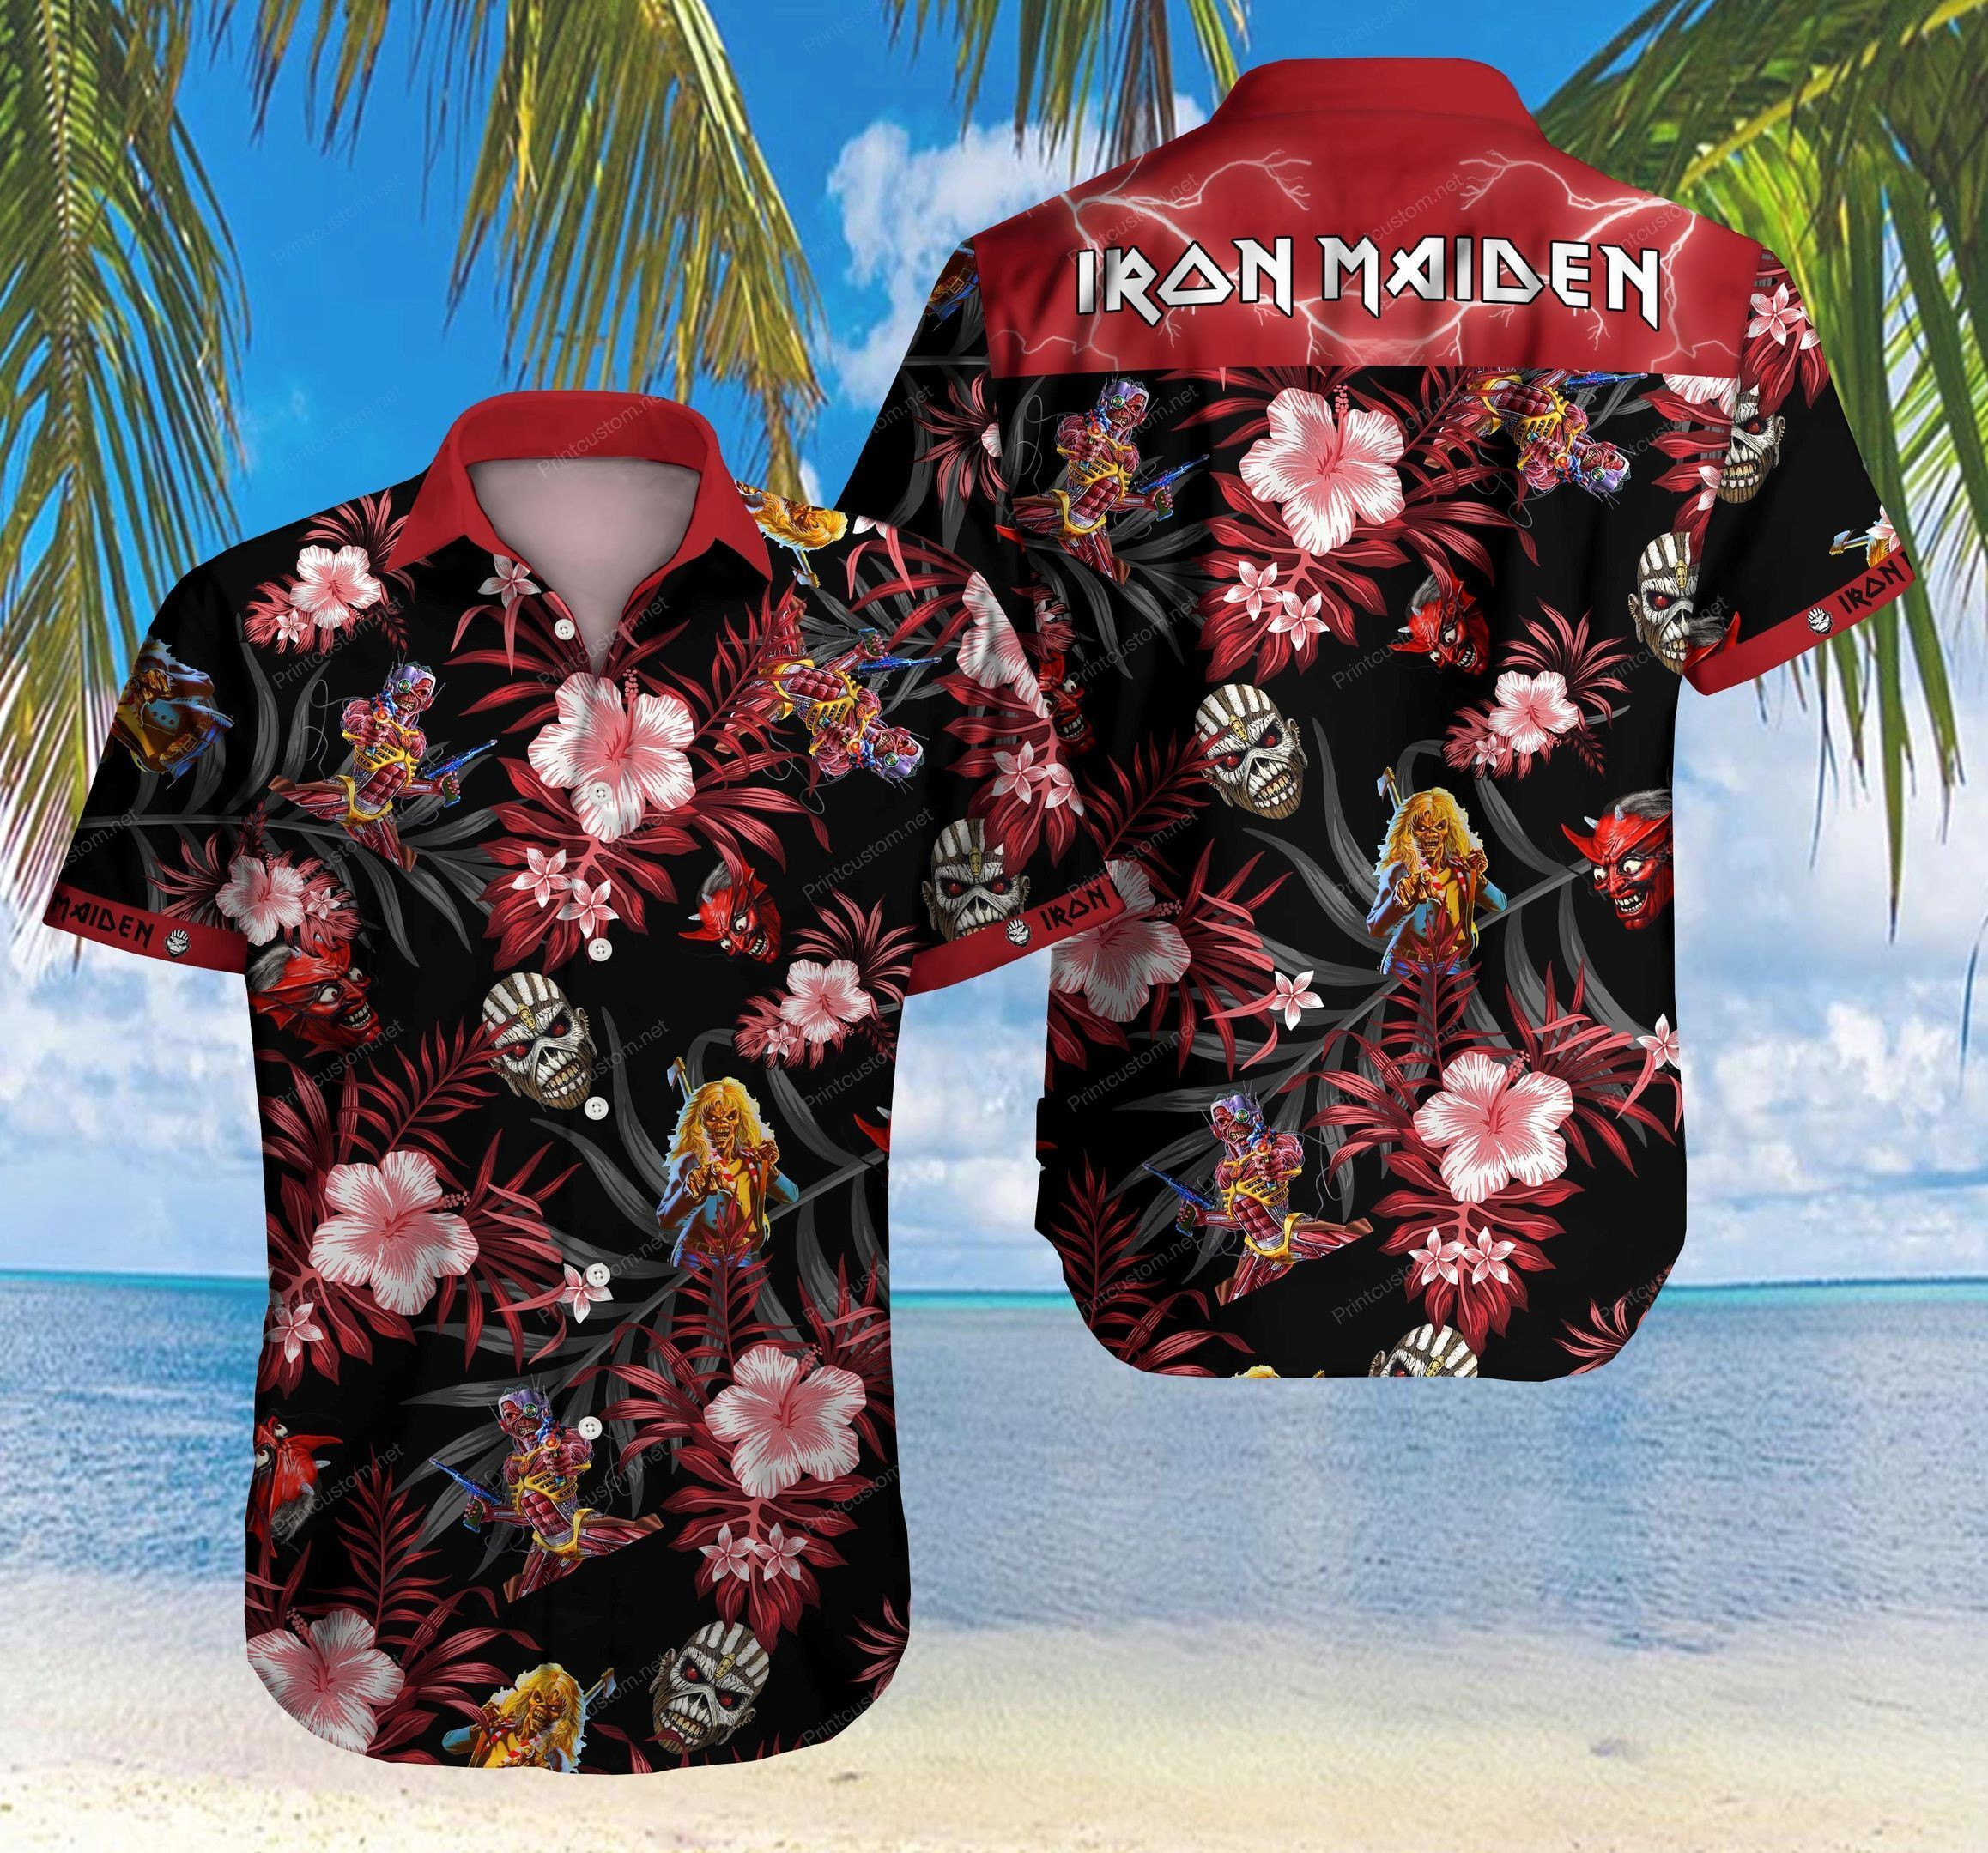 This short sleeve Hawaiian shirt is an option for a cool urban look 343